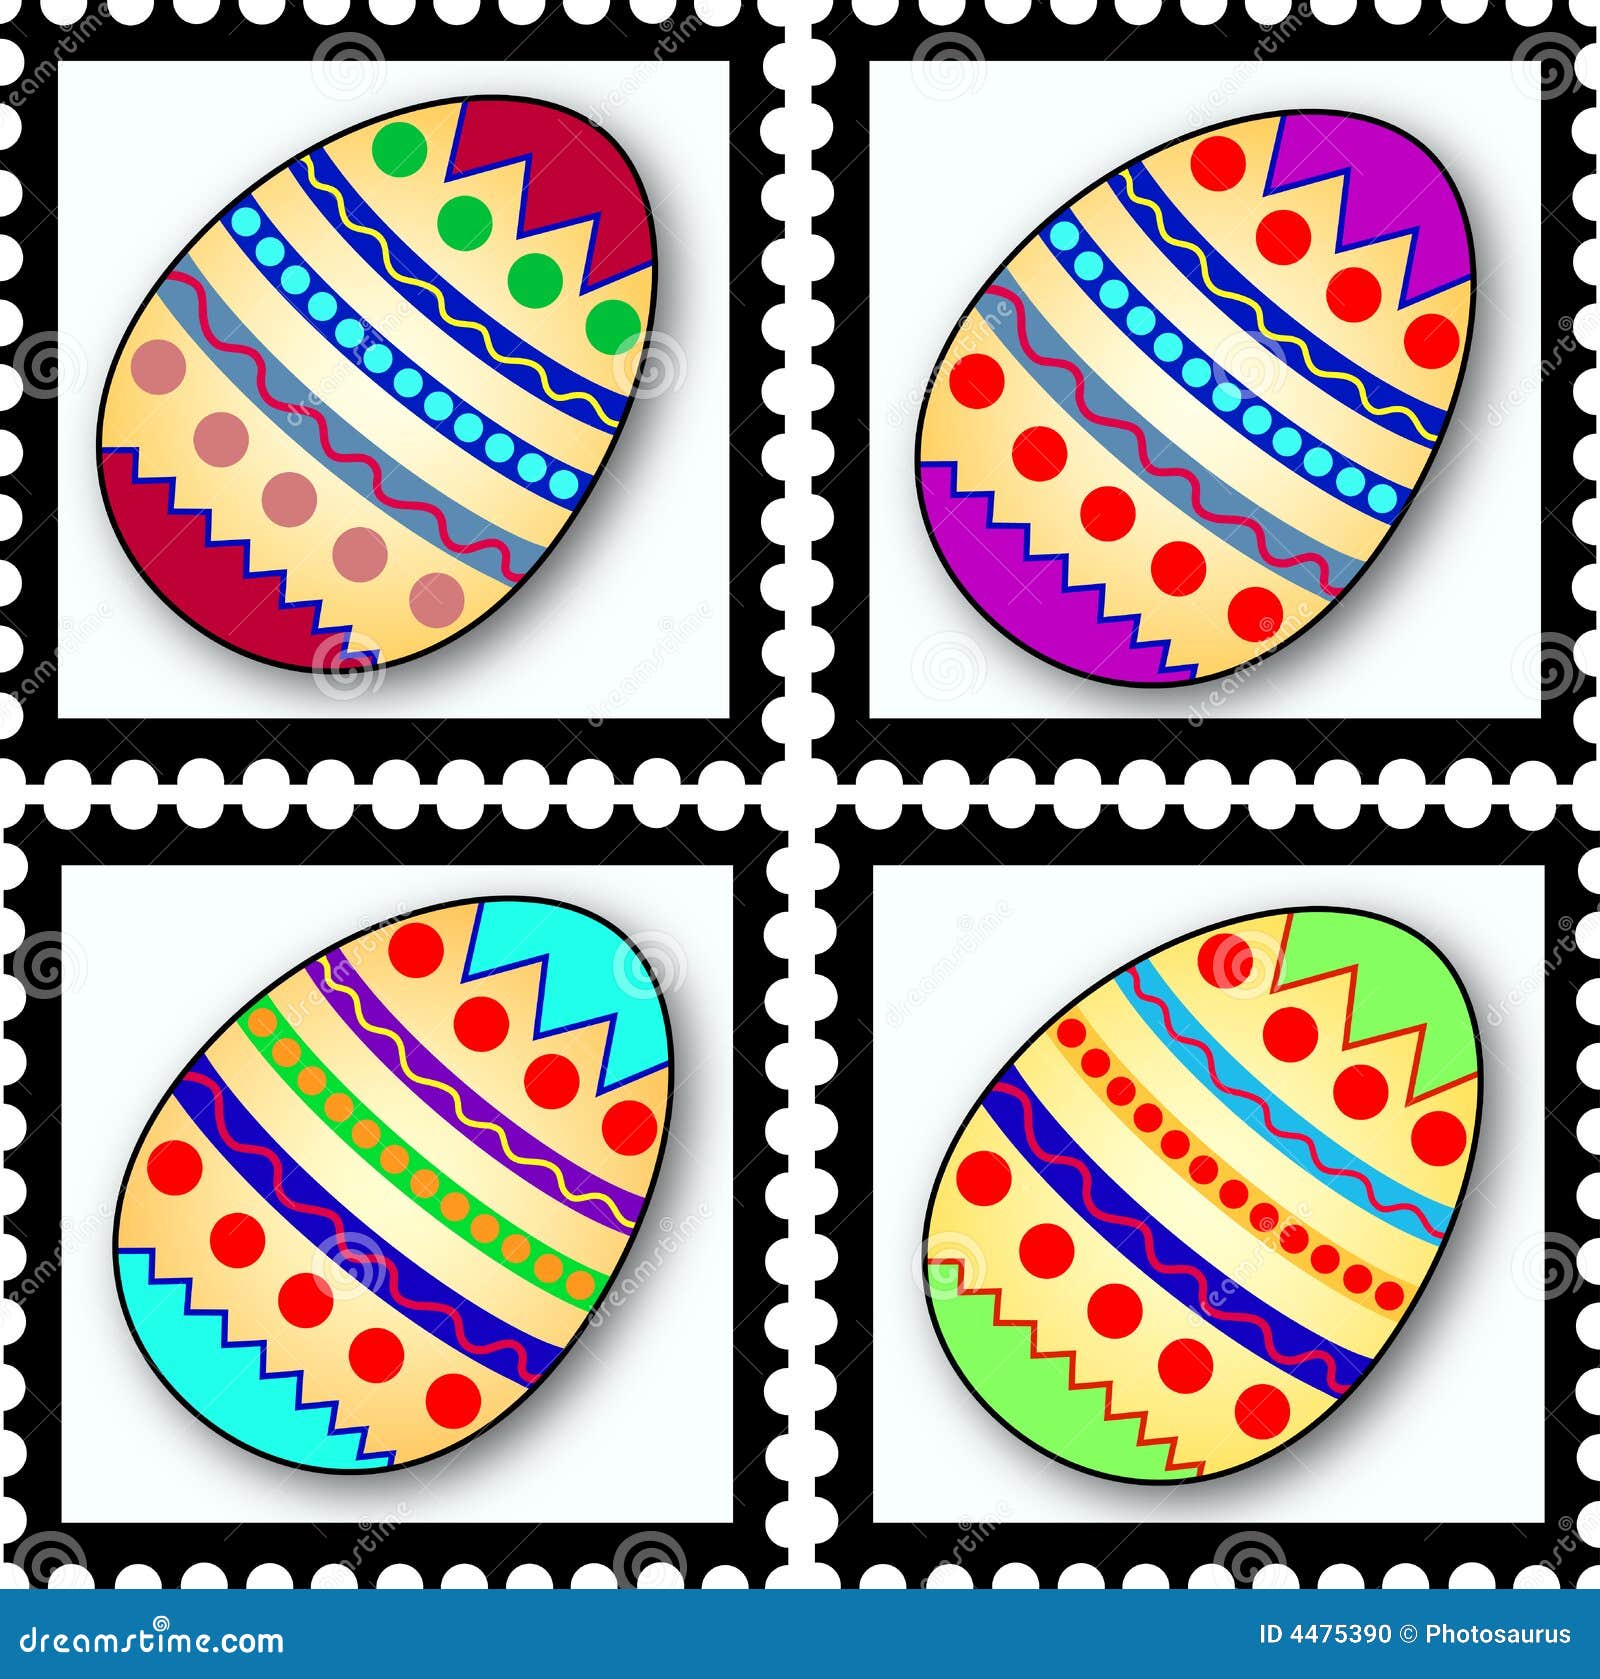 Egg Stamps